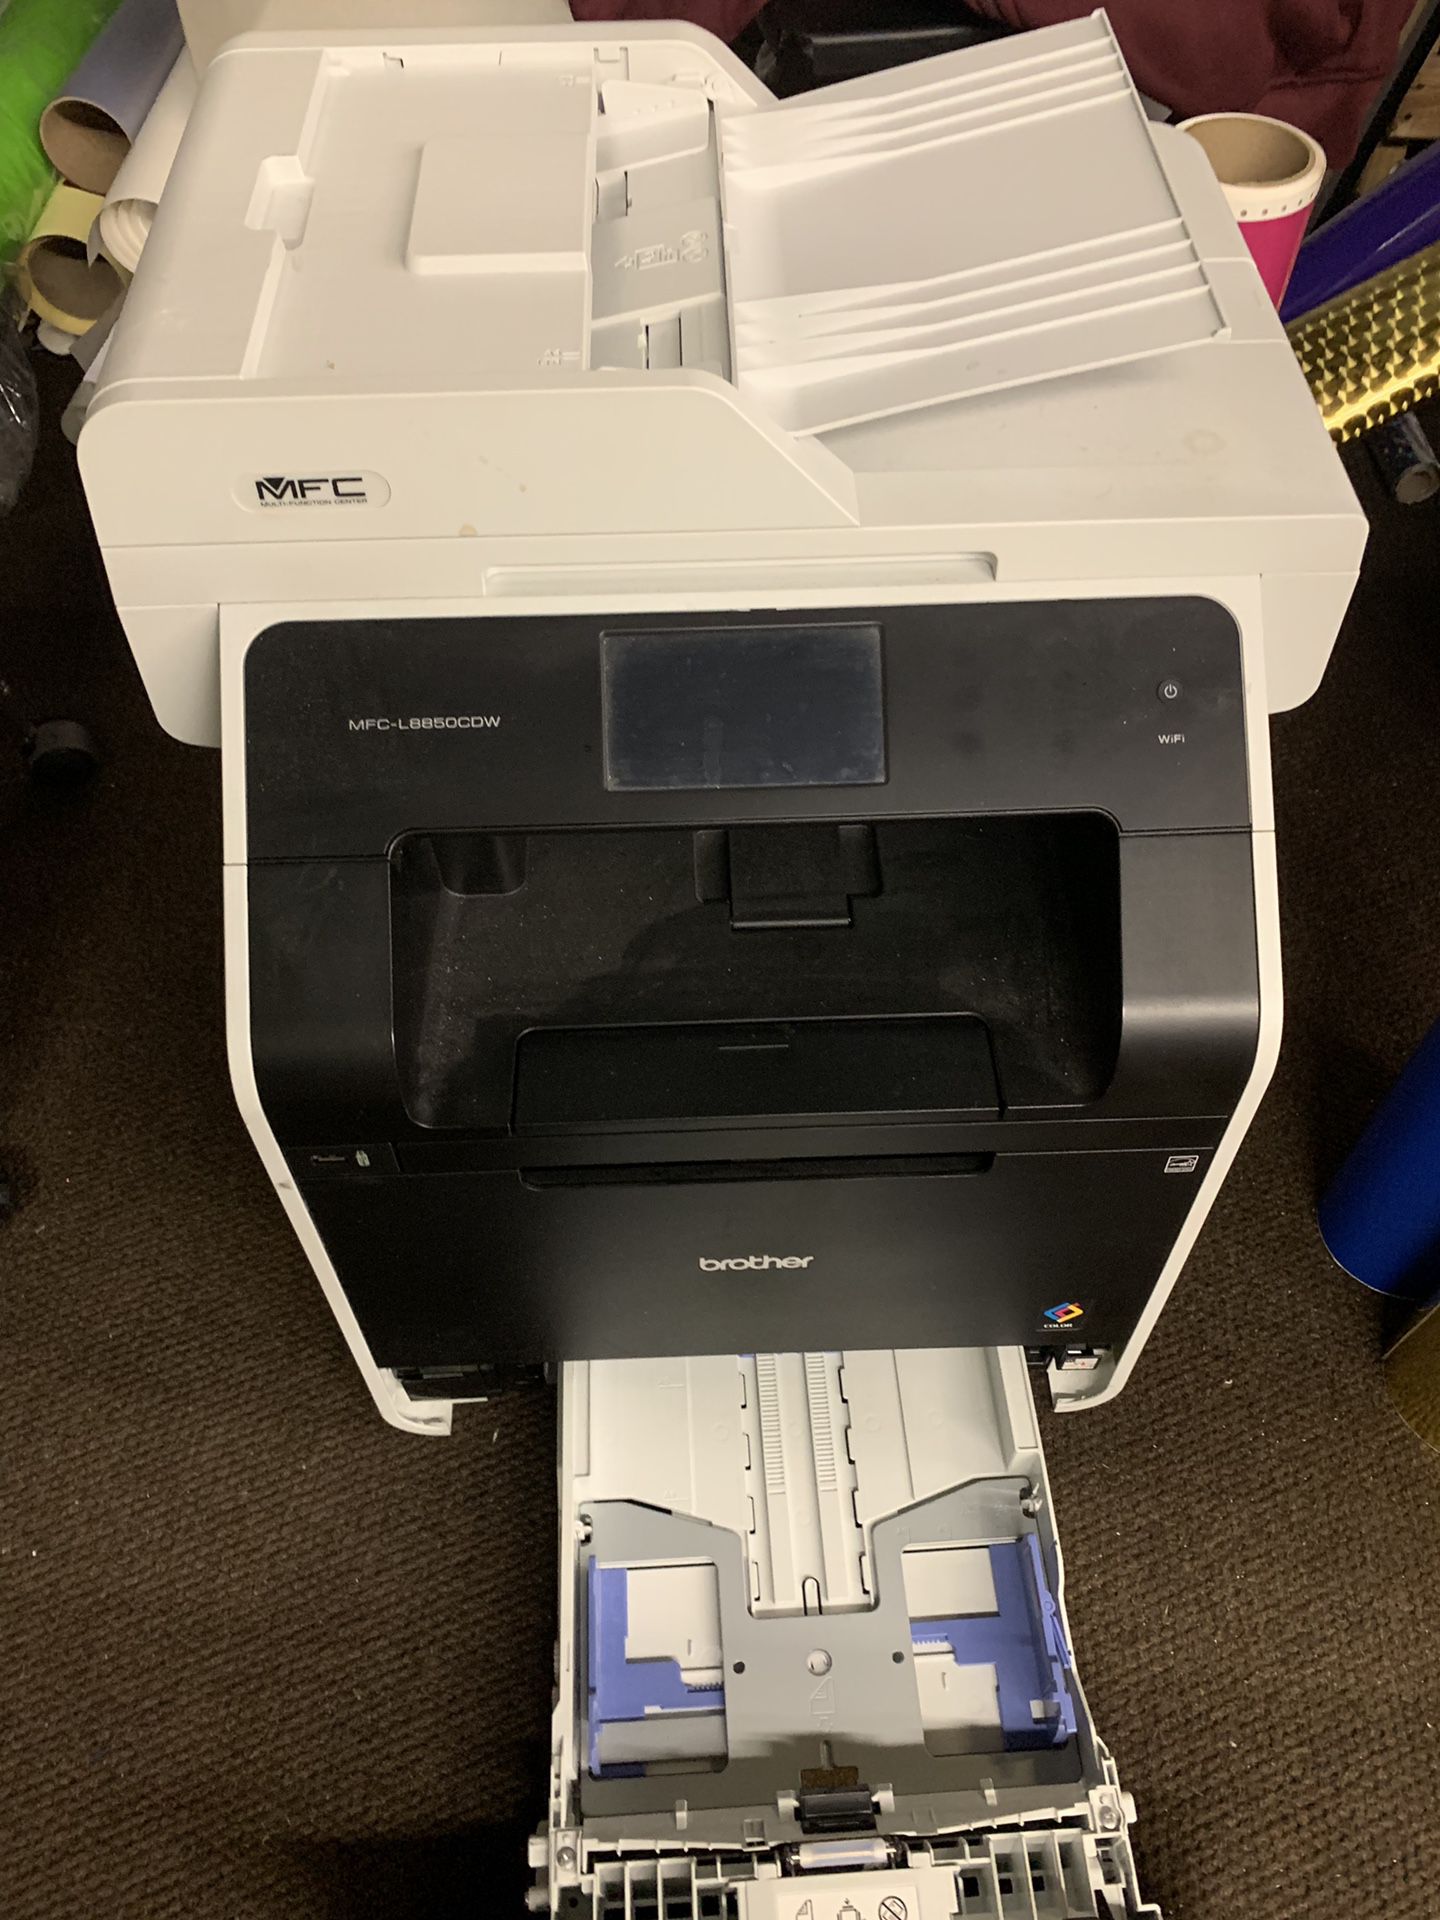 Brothers laser printer